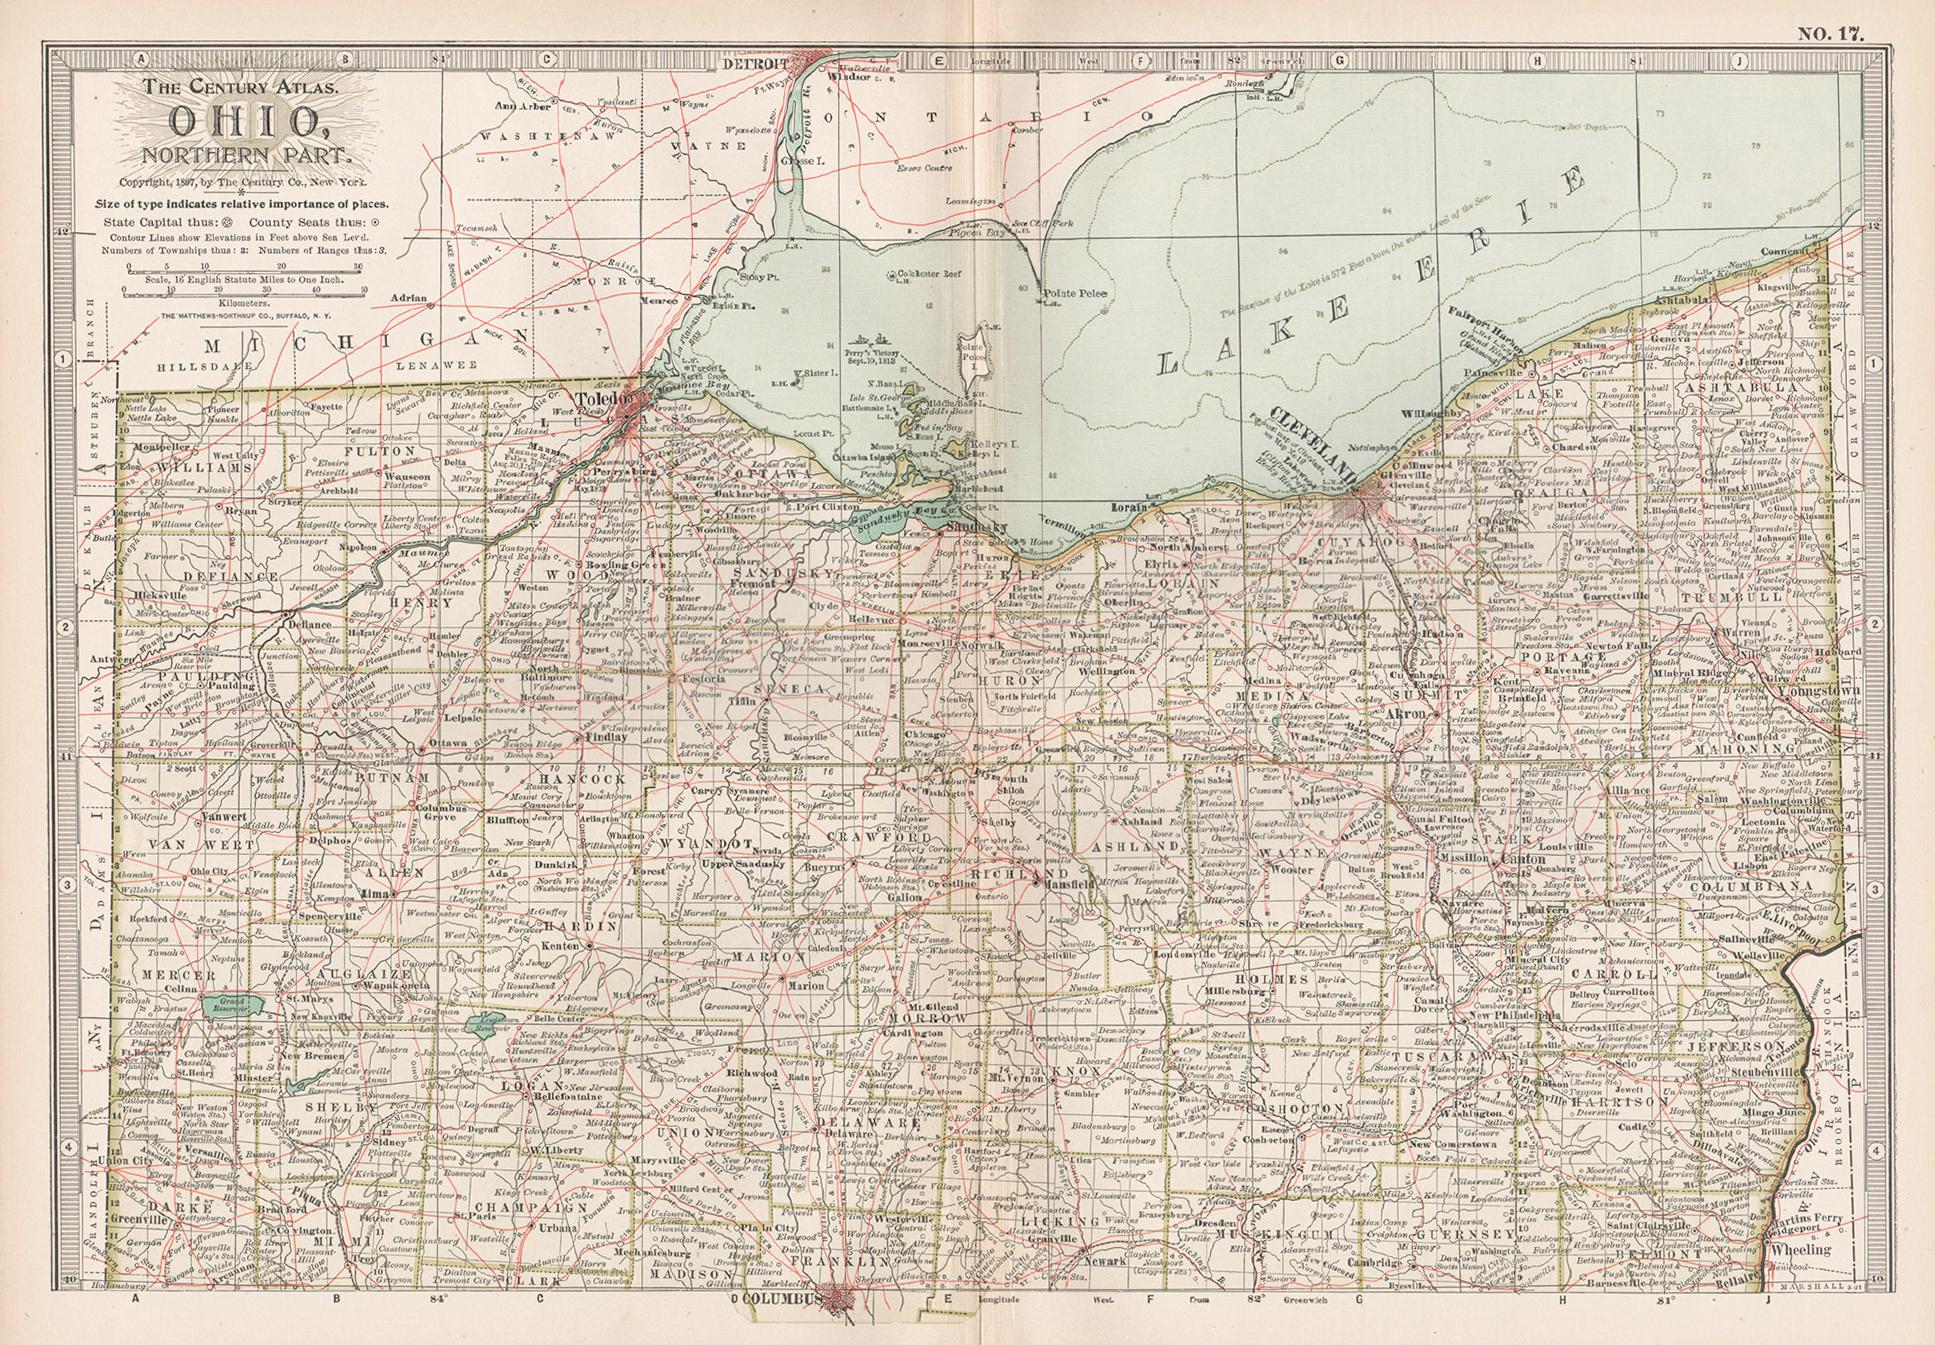 Unknown Print - Ohio, Northern Part. USA. Century Atlas state antique vintage map